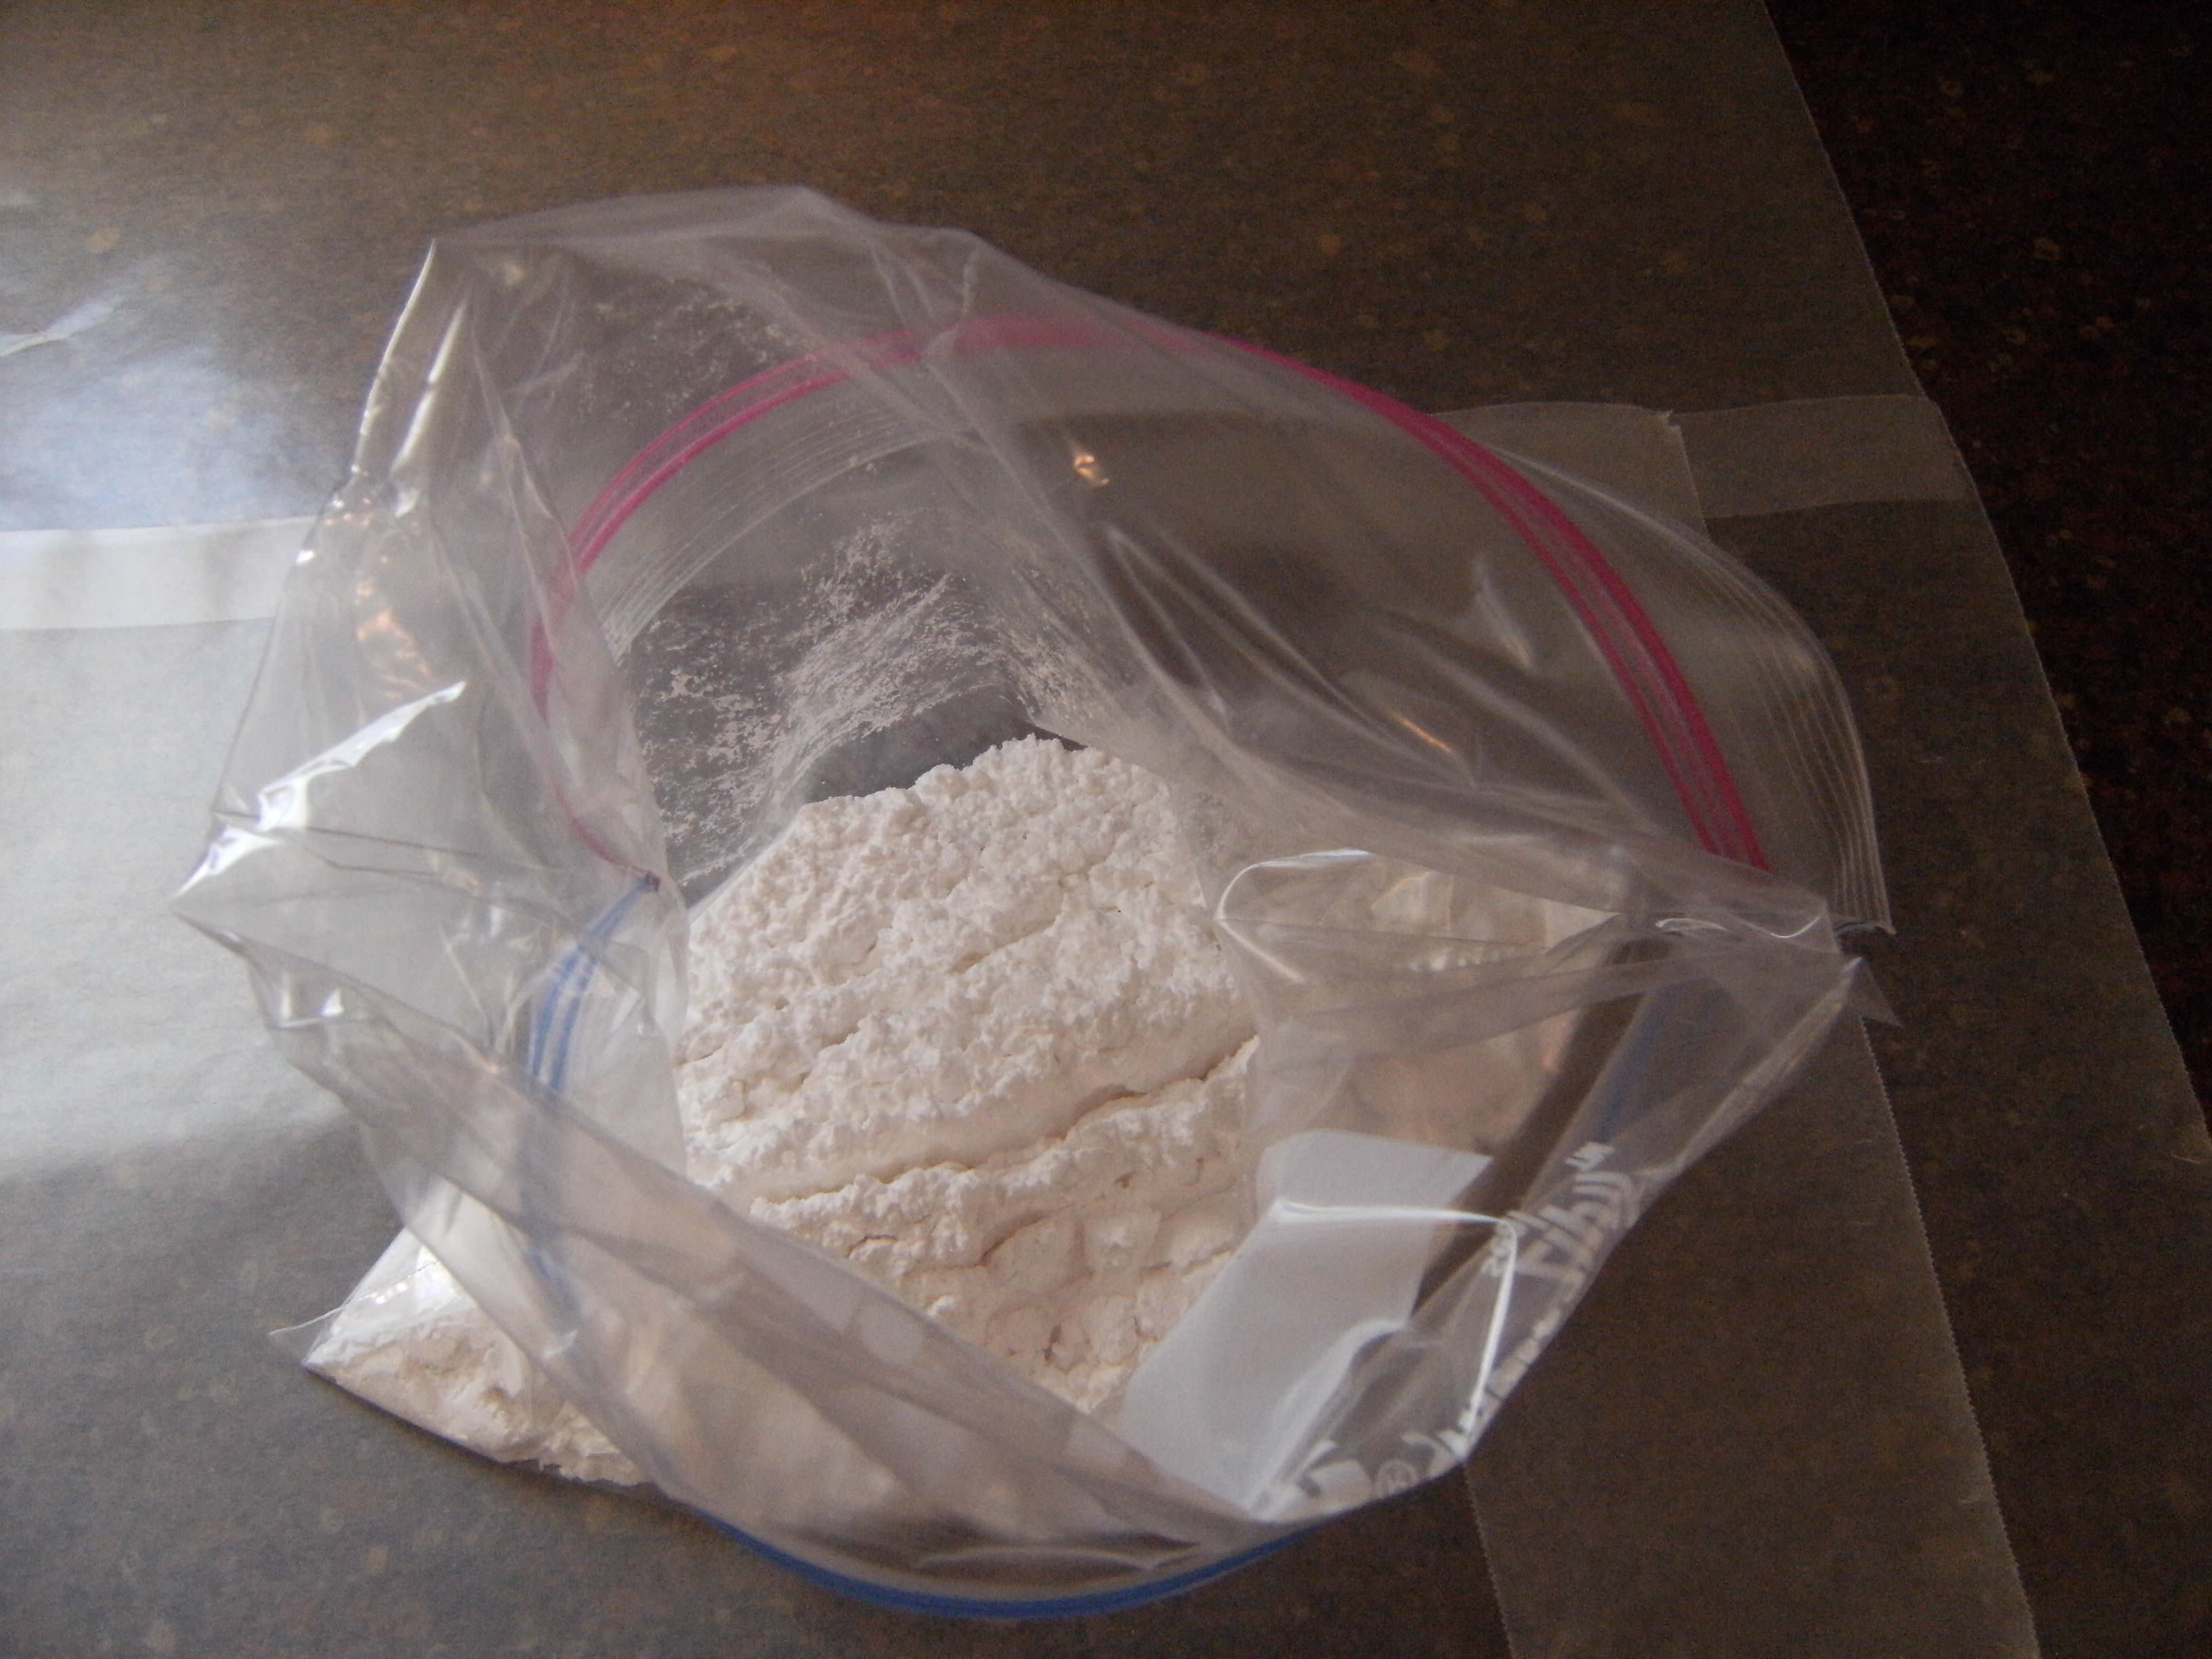 A plastic bag full of powdered sugar